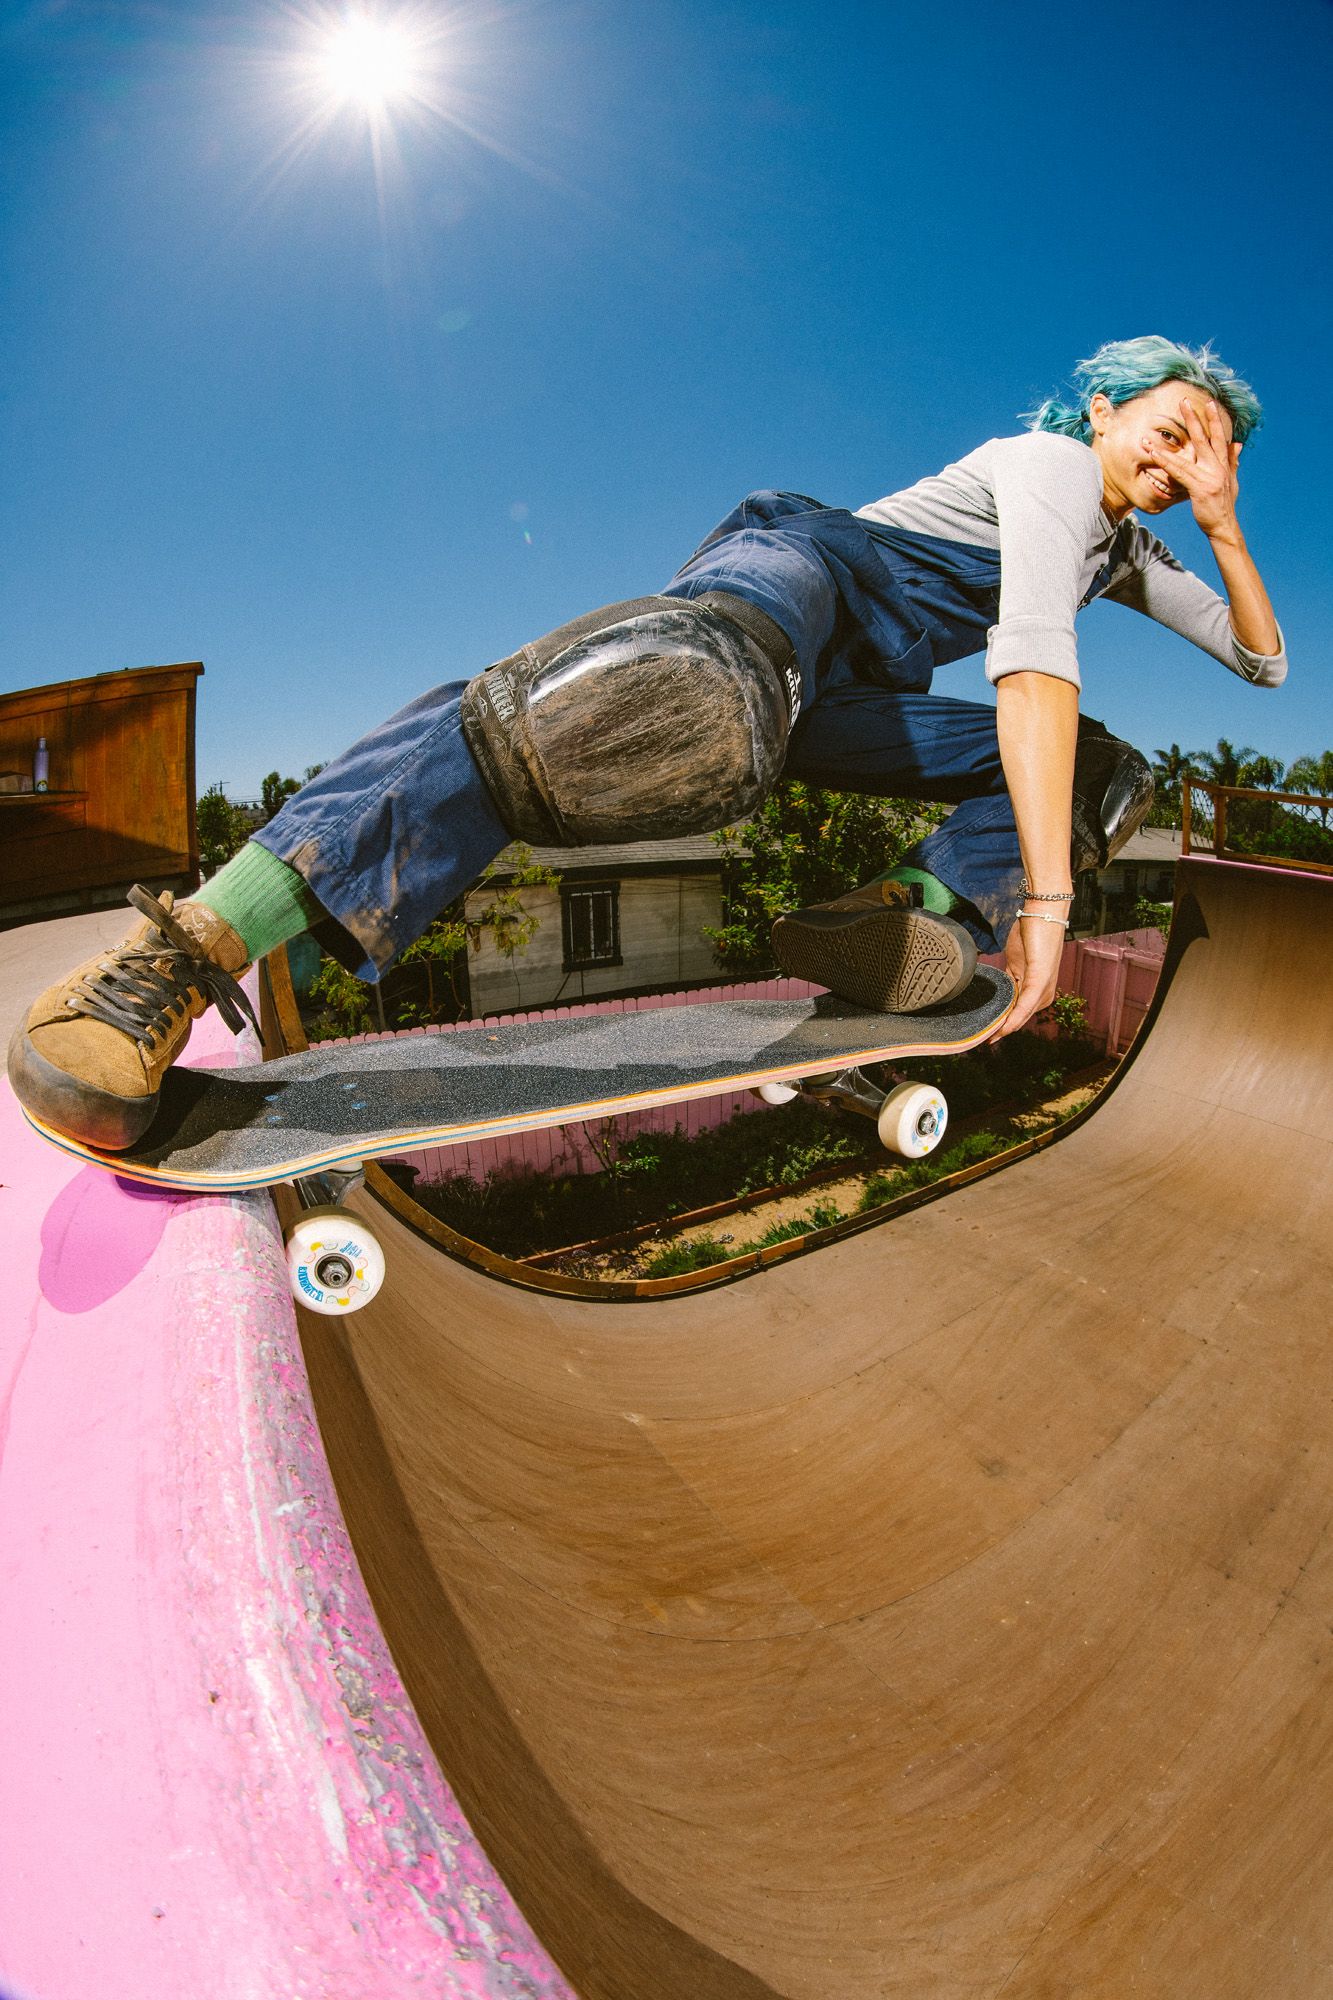 VANS Skateboarding “Head To Toe” Lizzie Armanto